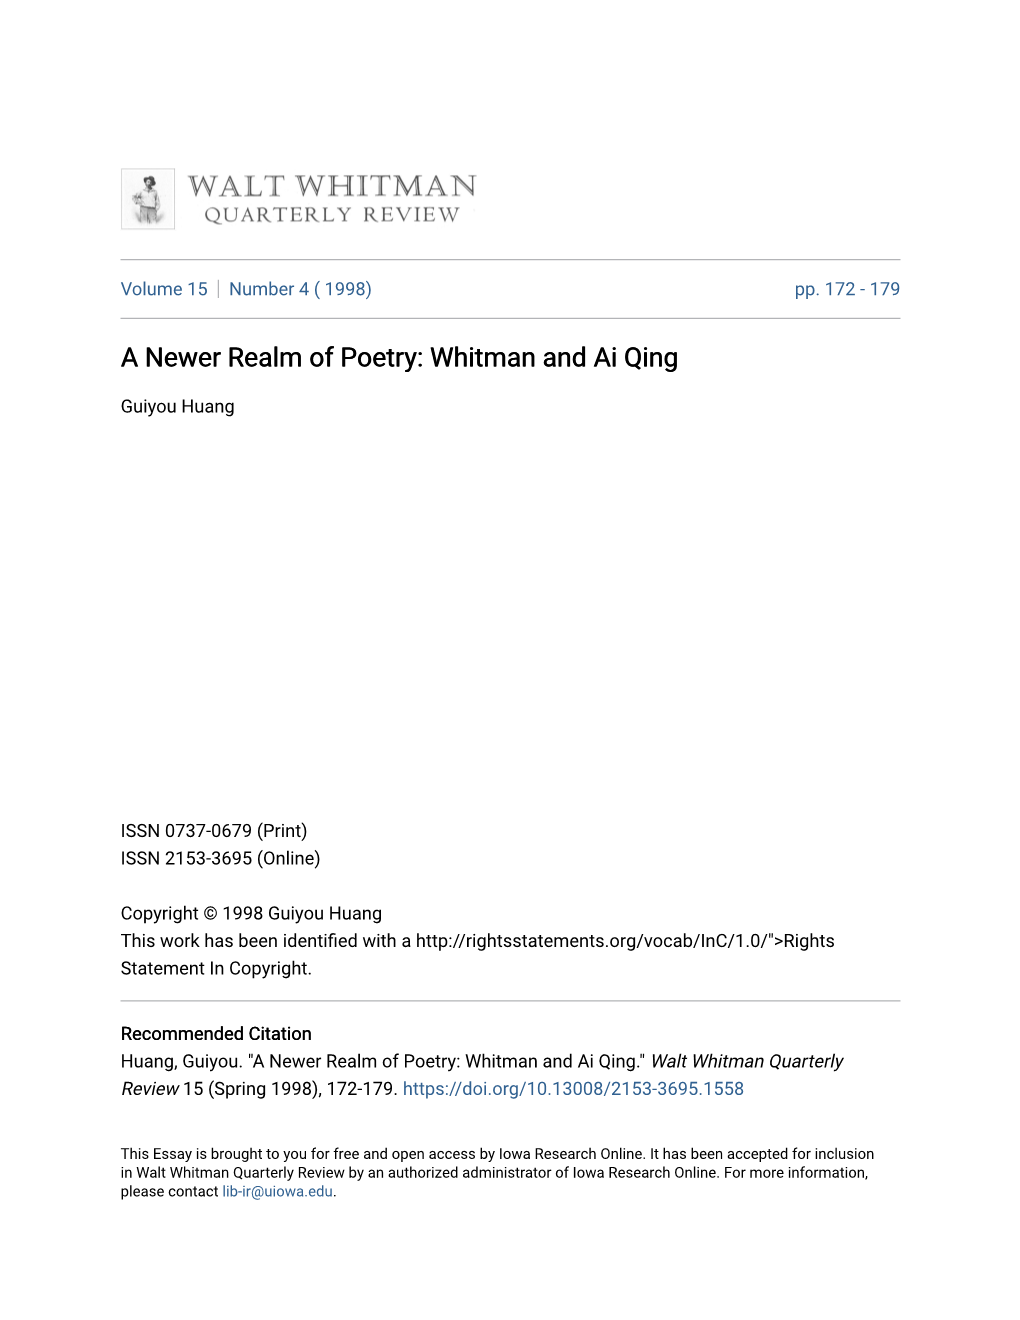 Whitman and Ai Qing